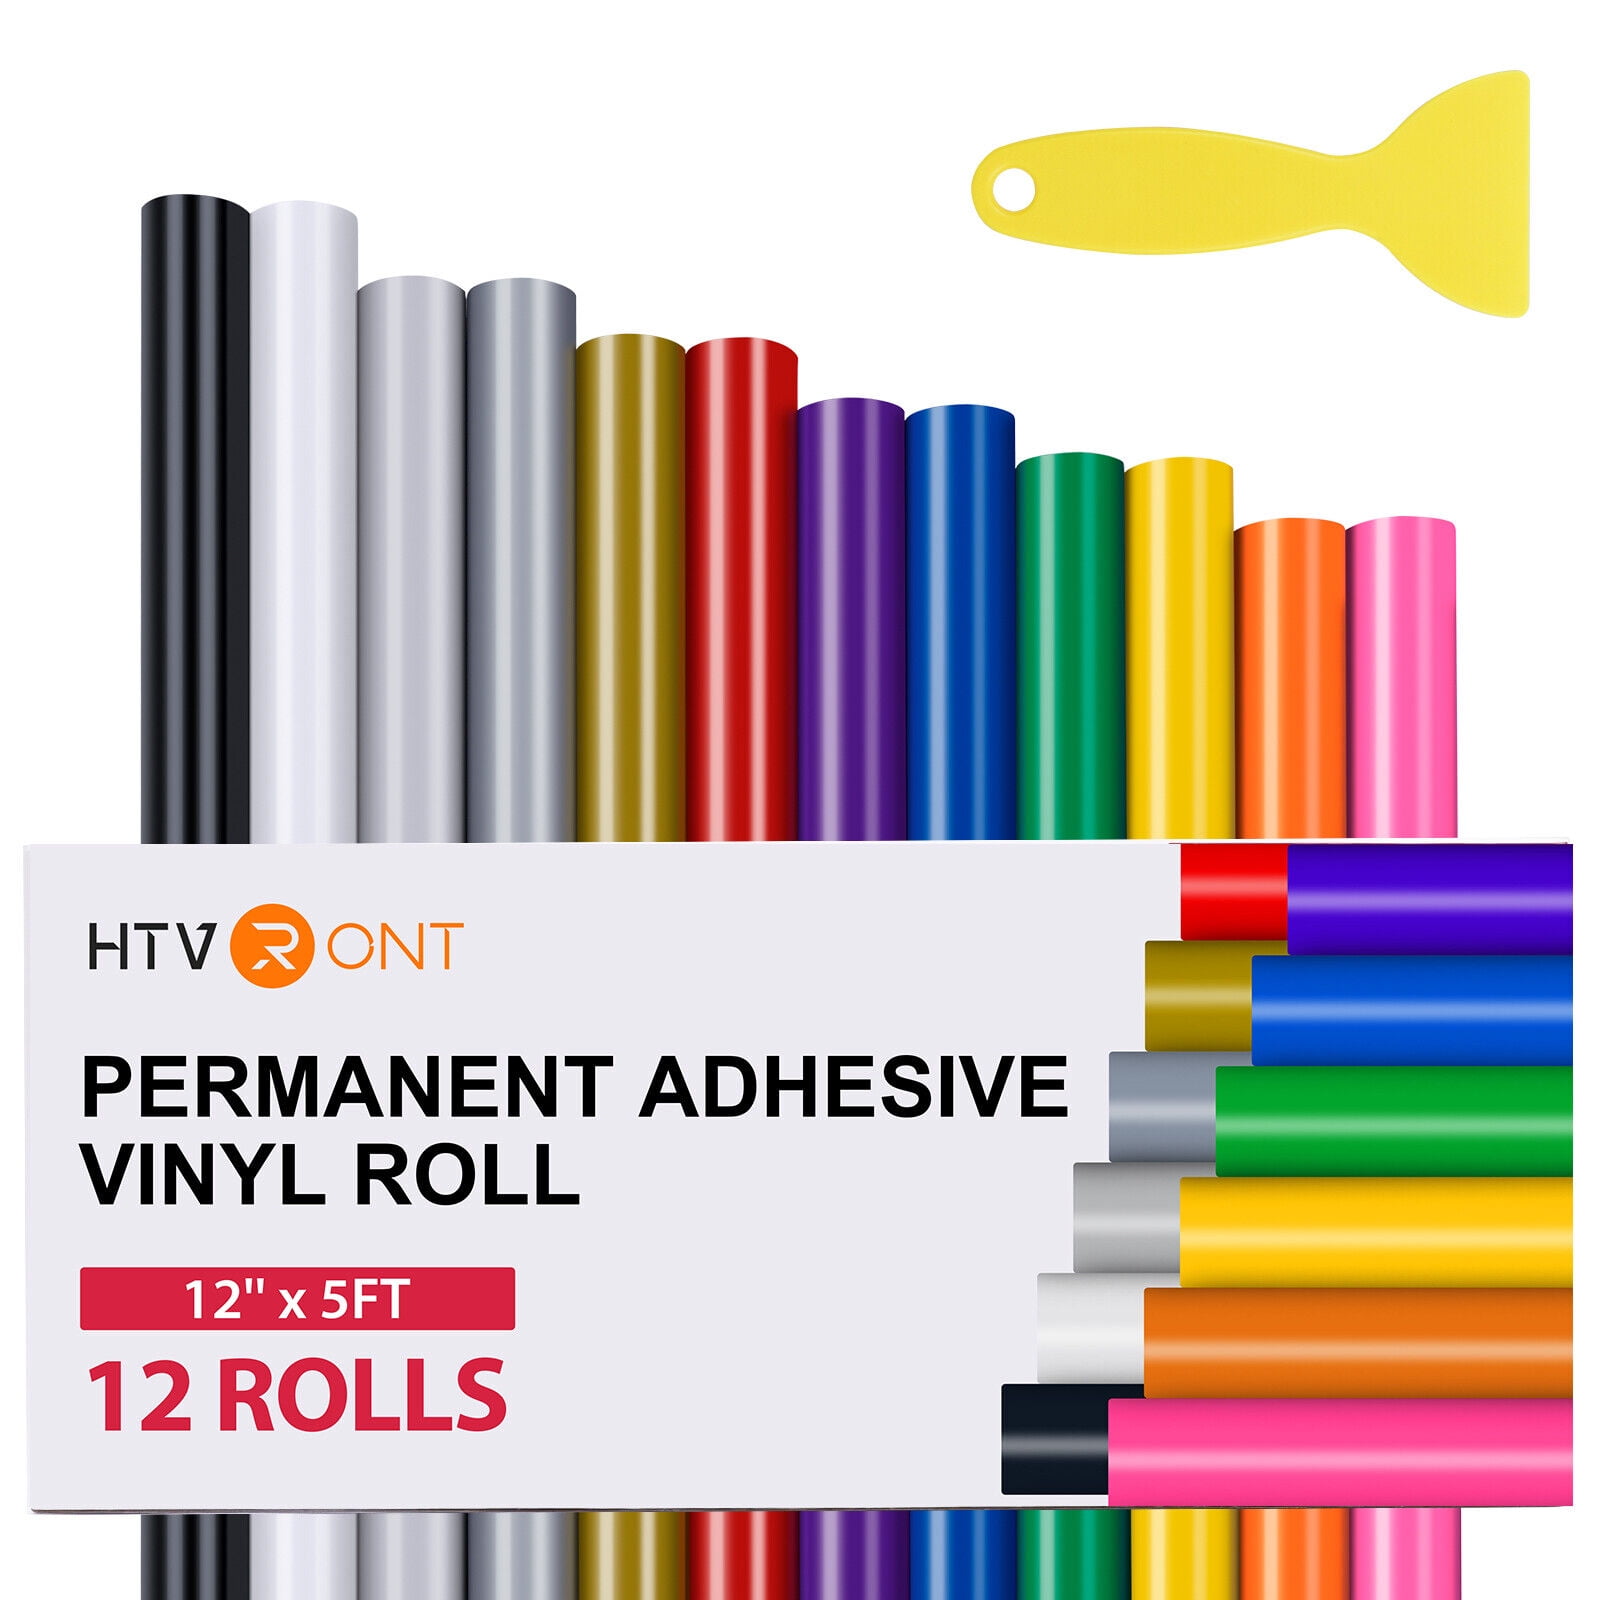 HTVRONT Glow in Dark Permanent Vinyl Neon Adhesive Vinyl Roll - 12 x 5ft (4 Colors), Neon Yellow to Yellow